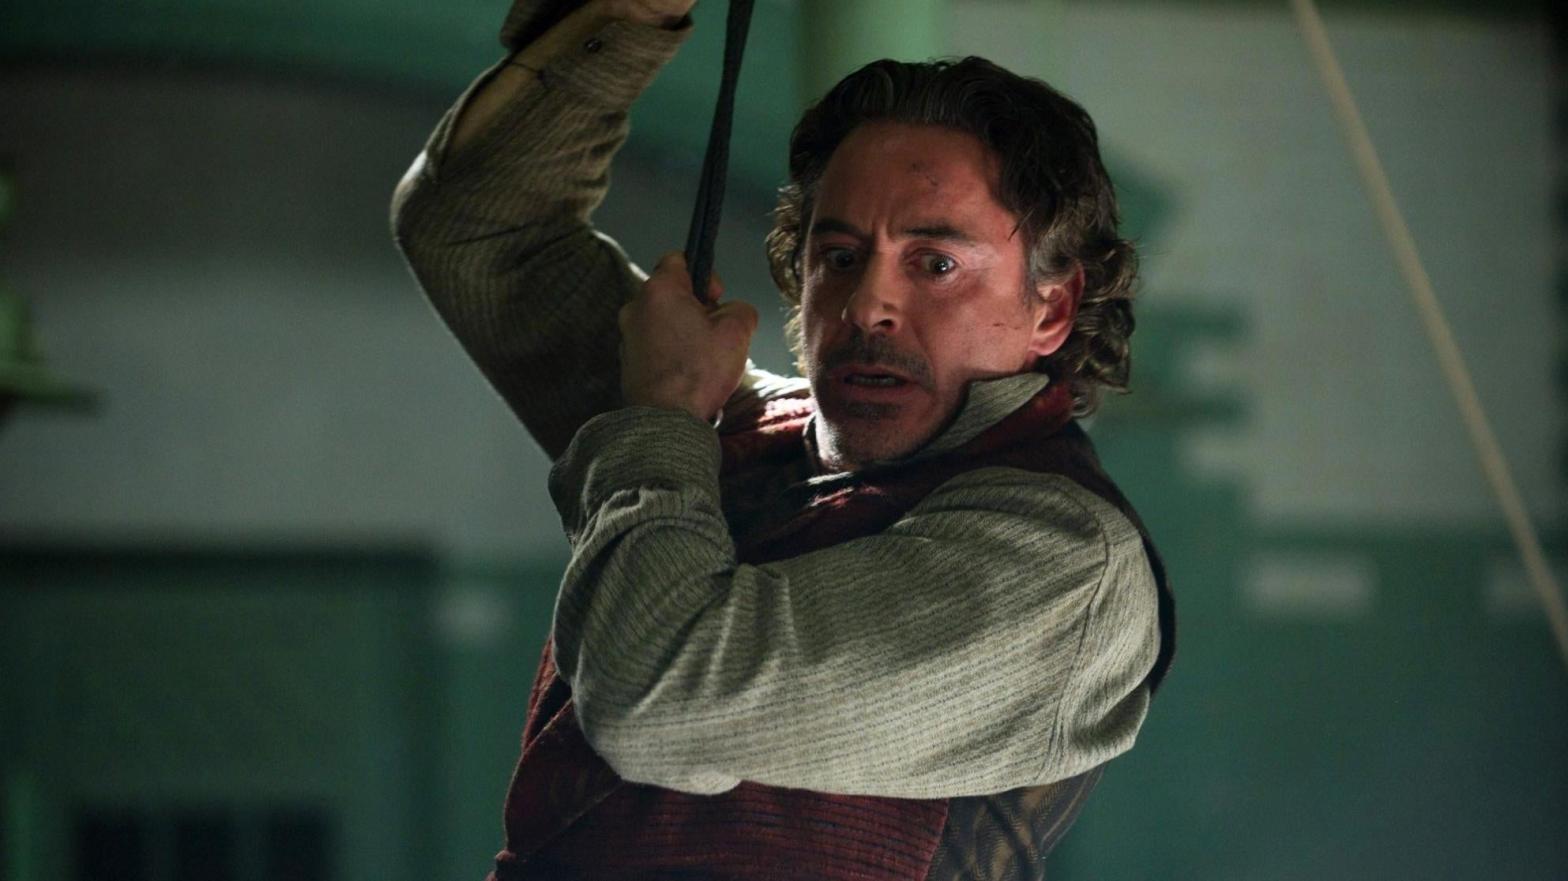 Robert Downey Jr.'s Sherlock Holmes might be swinging to streaming. (Image: Warner Bros.)